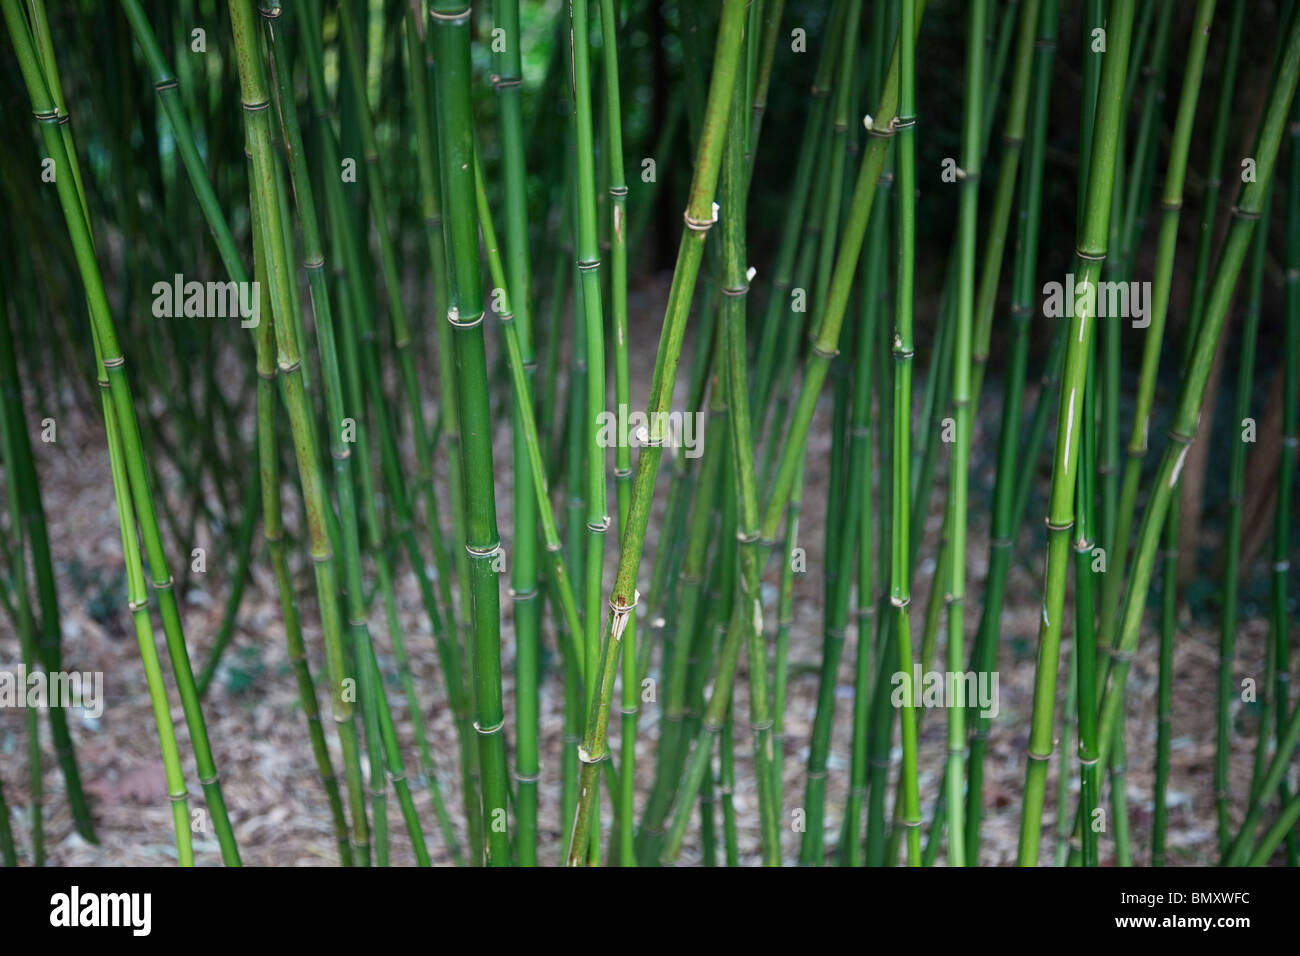 Green shoots of bamboo Stock Photo